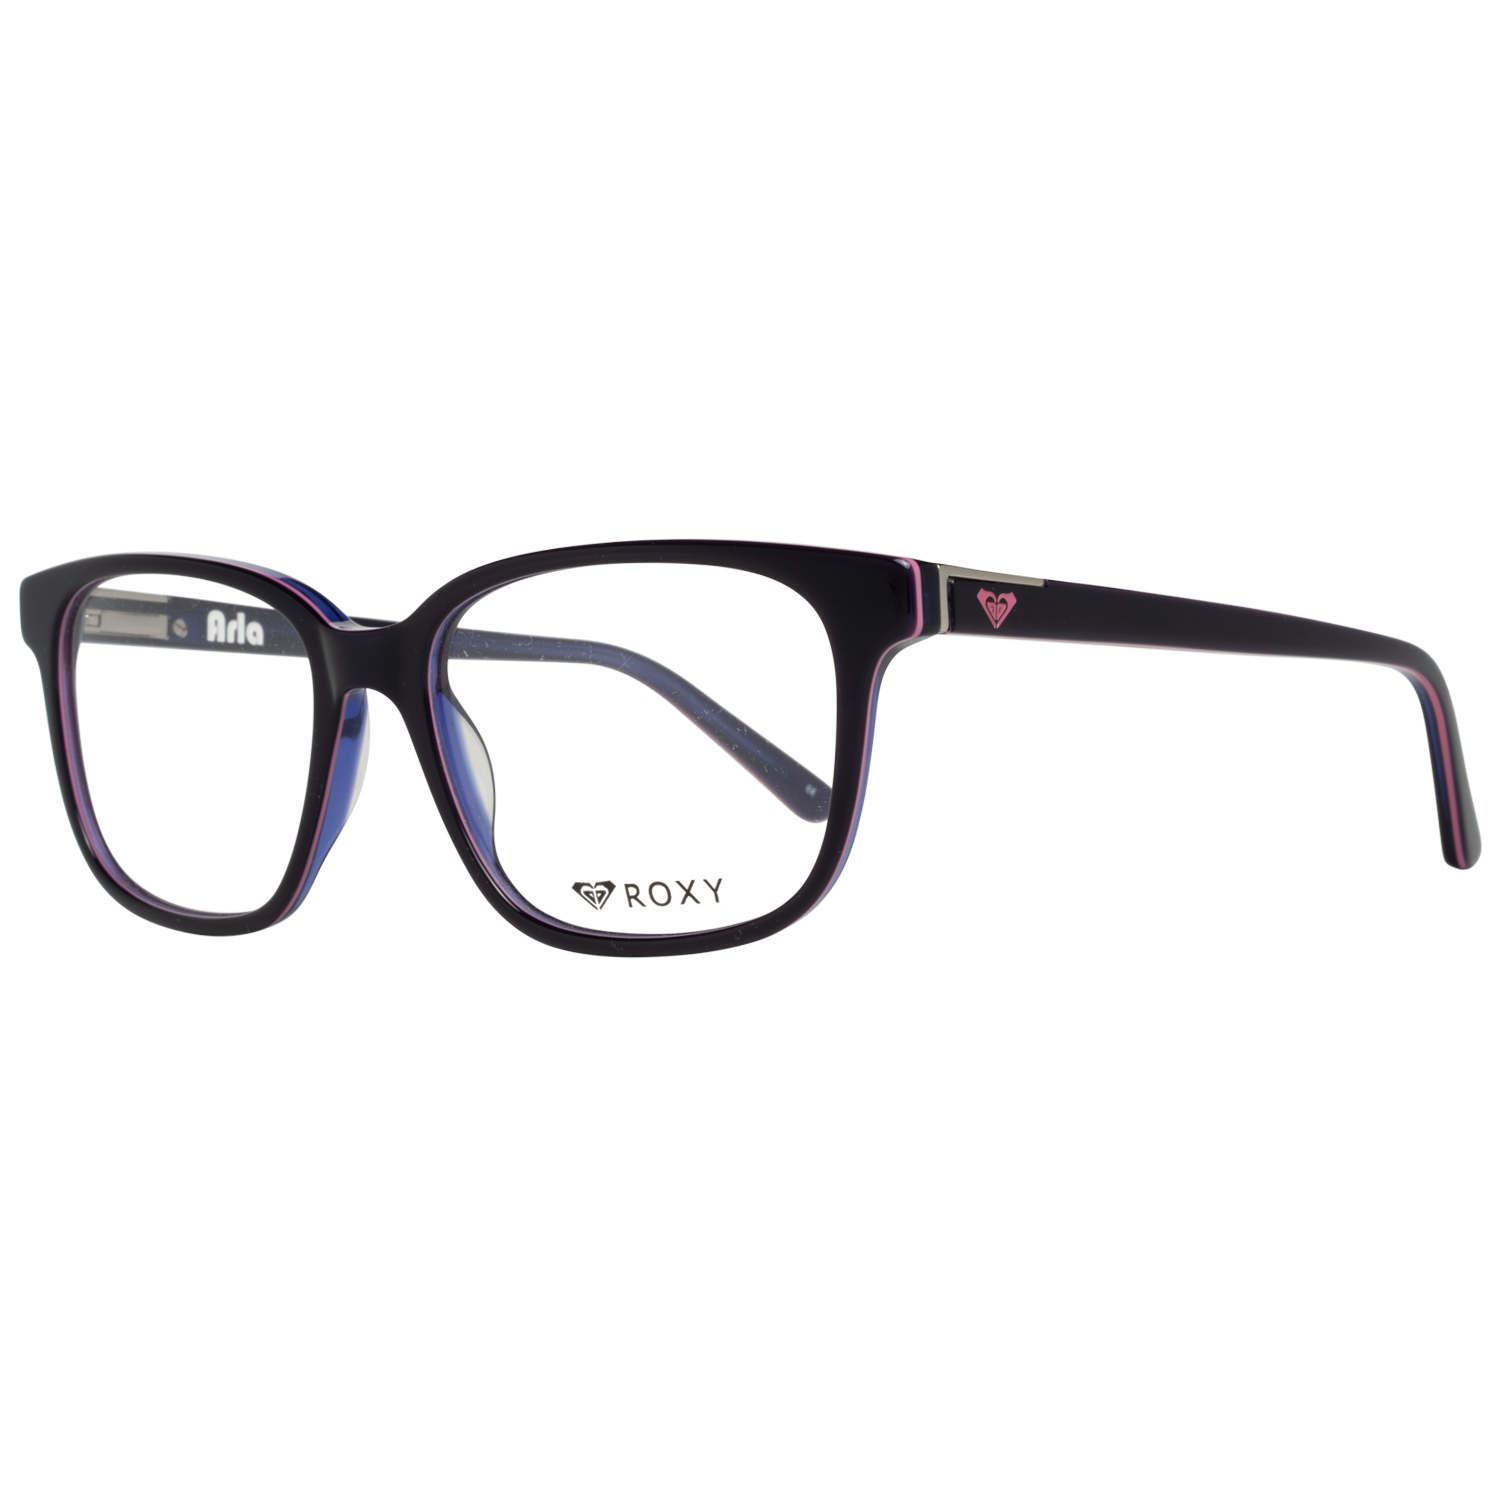 Roxy Frames Roxy Glasses Optical Frame ERJEG03030 APUR 52 Eyeglasses Eyewear UK USA Australia 